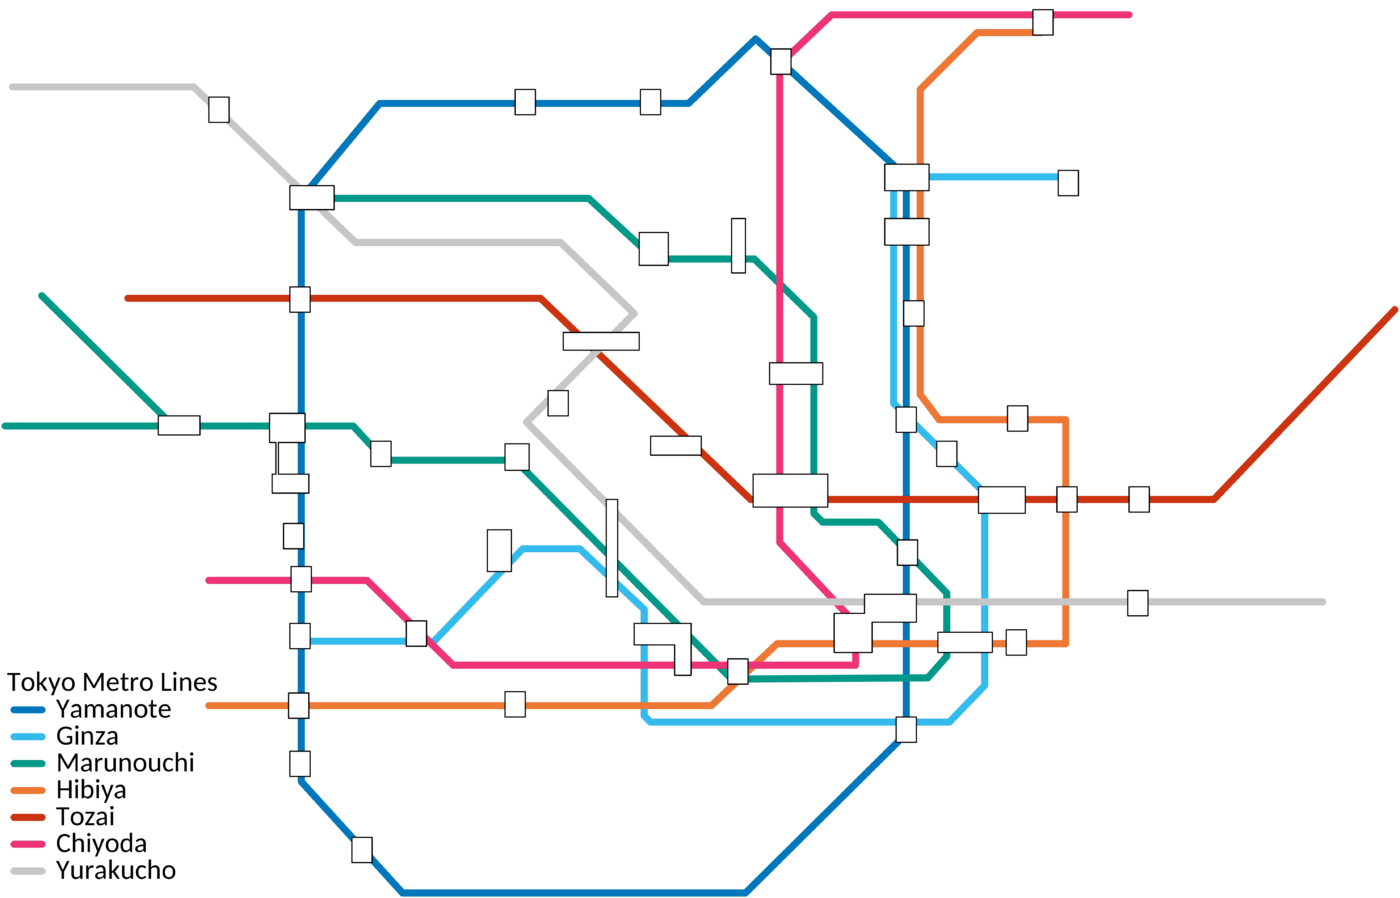 Tokyo metro in vibrant scheme